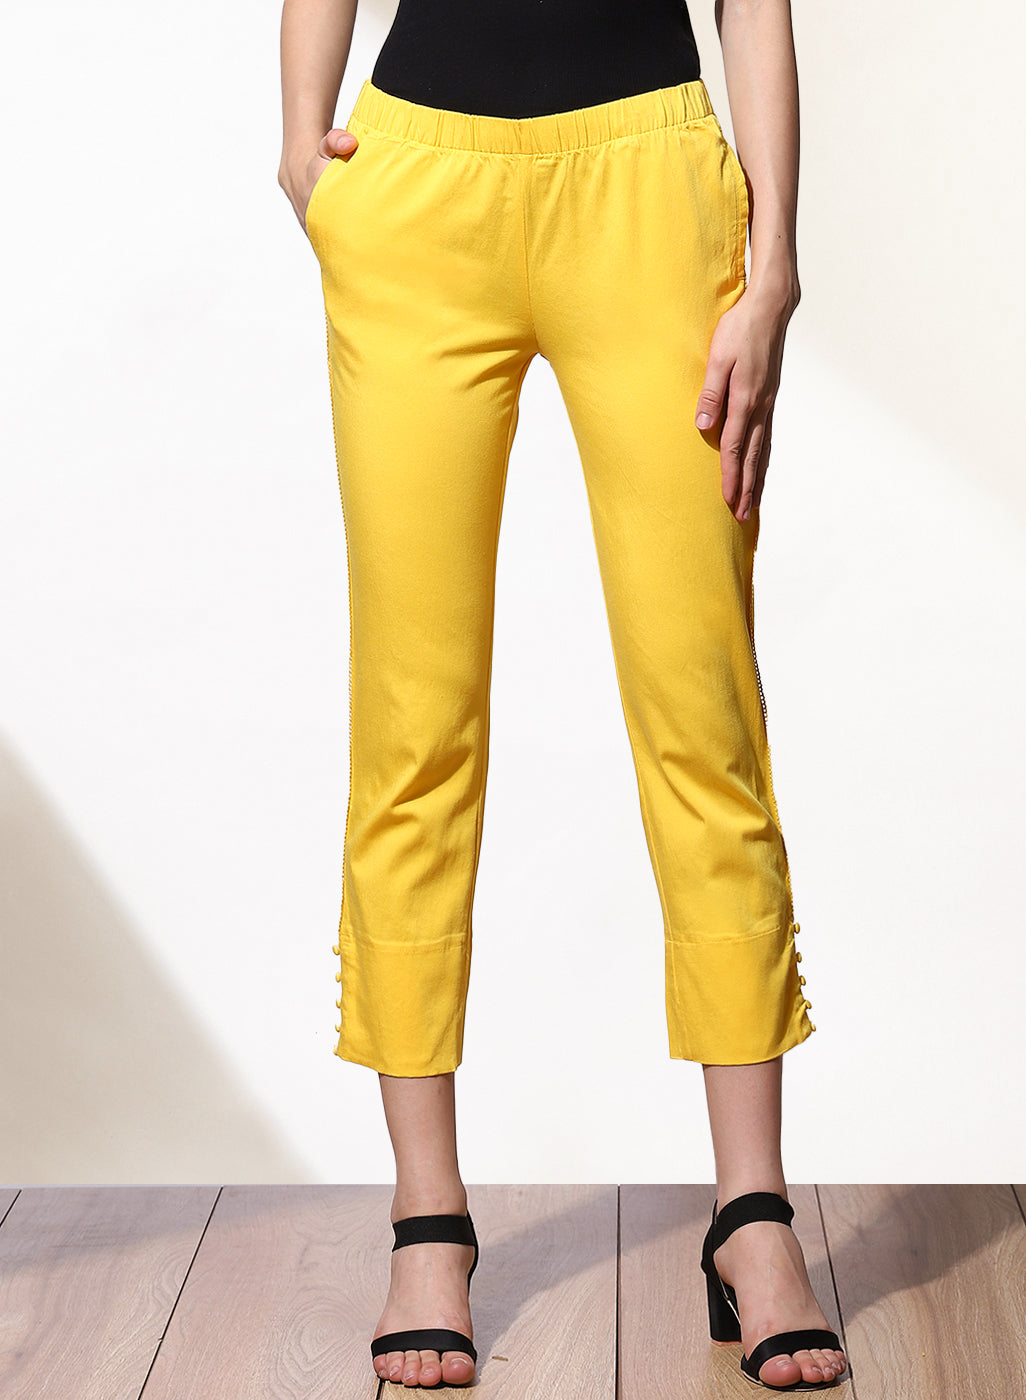 Shop Elegant Capri Pants for Women Online in India